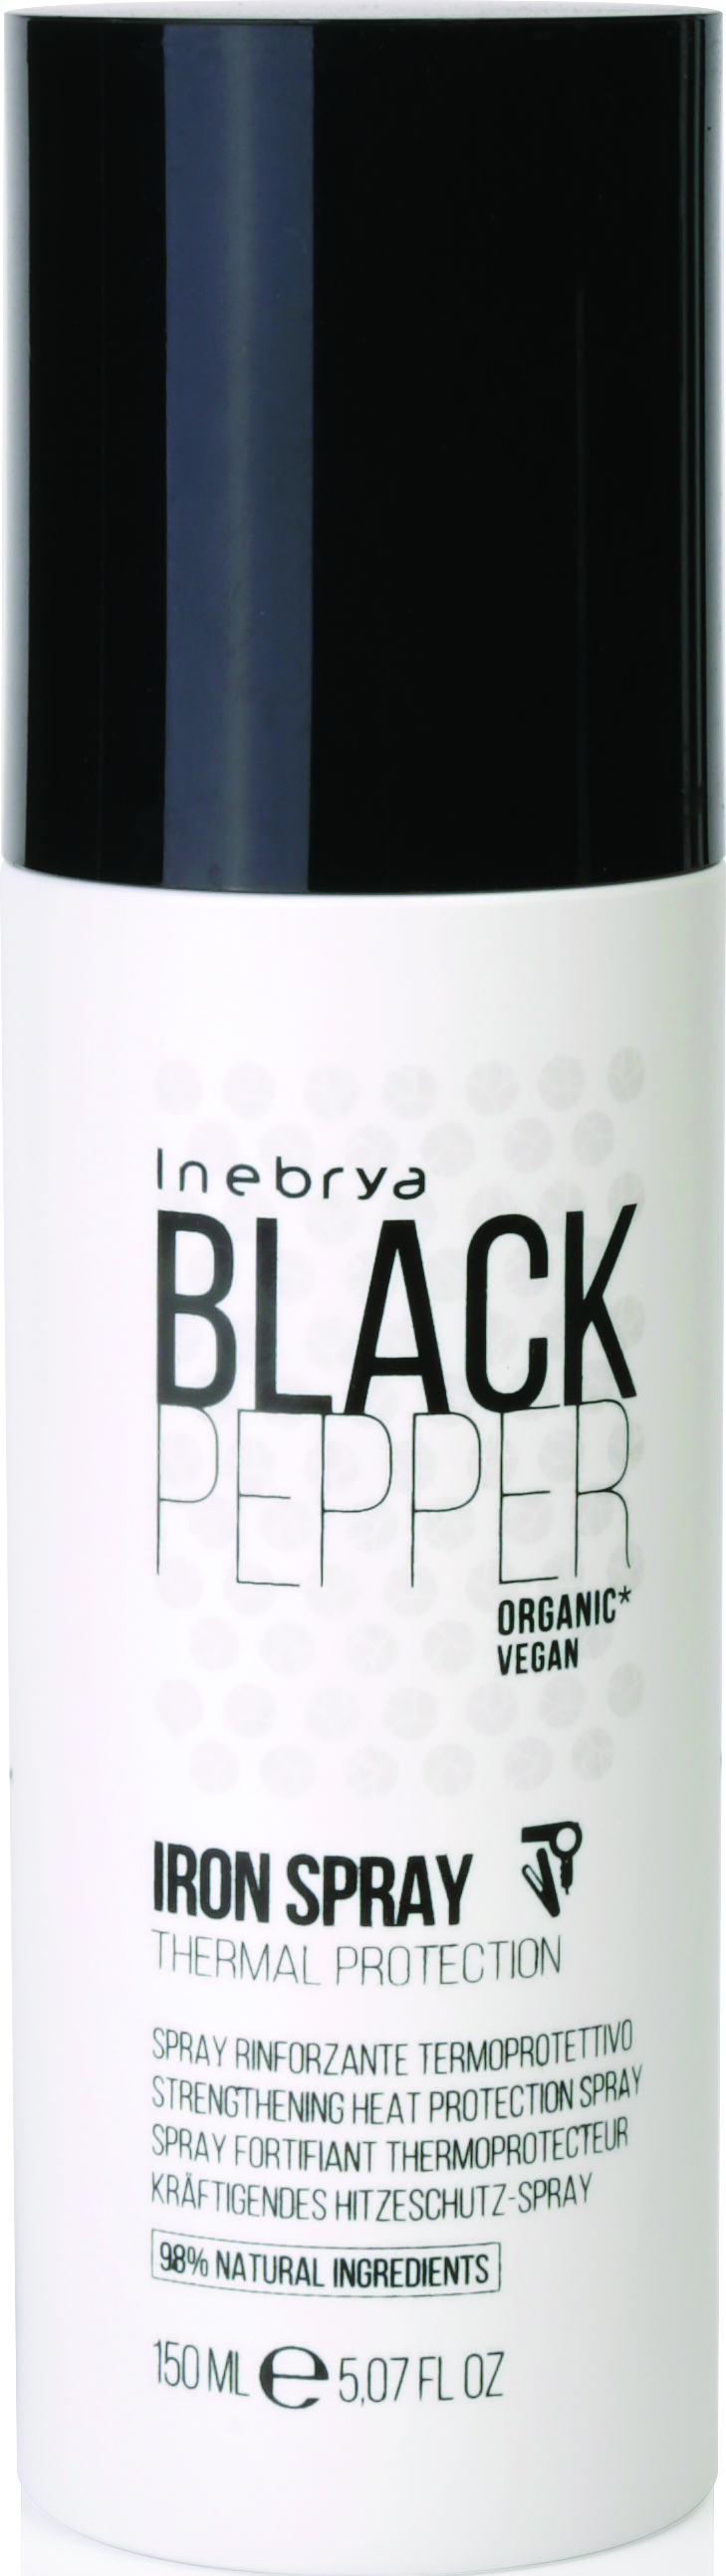 Inebrya Black Pepper Iron Spray, 150ml